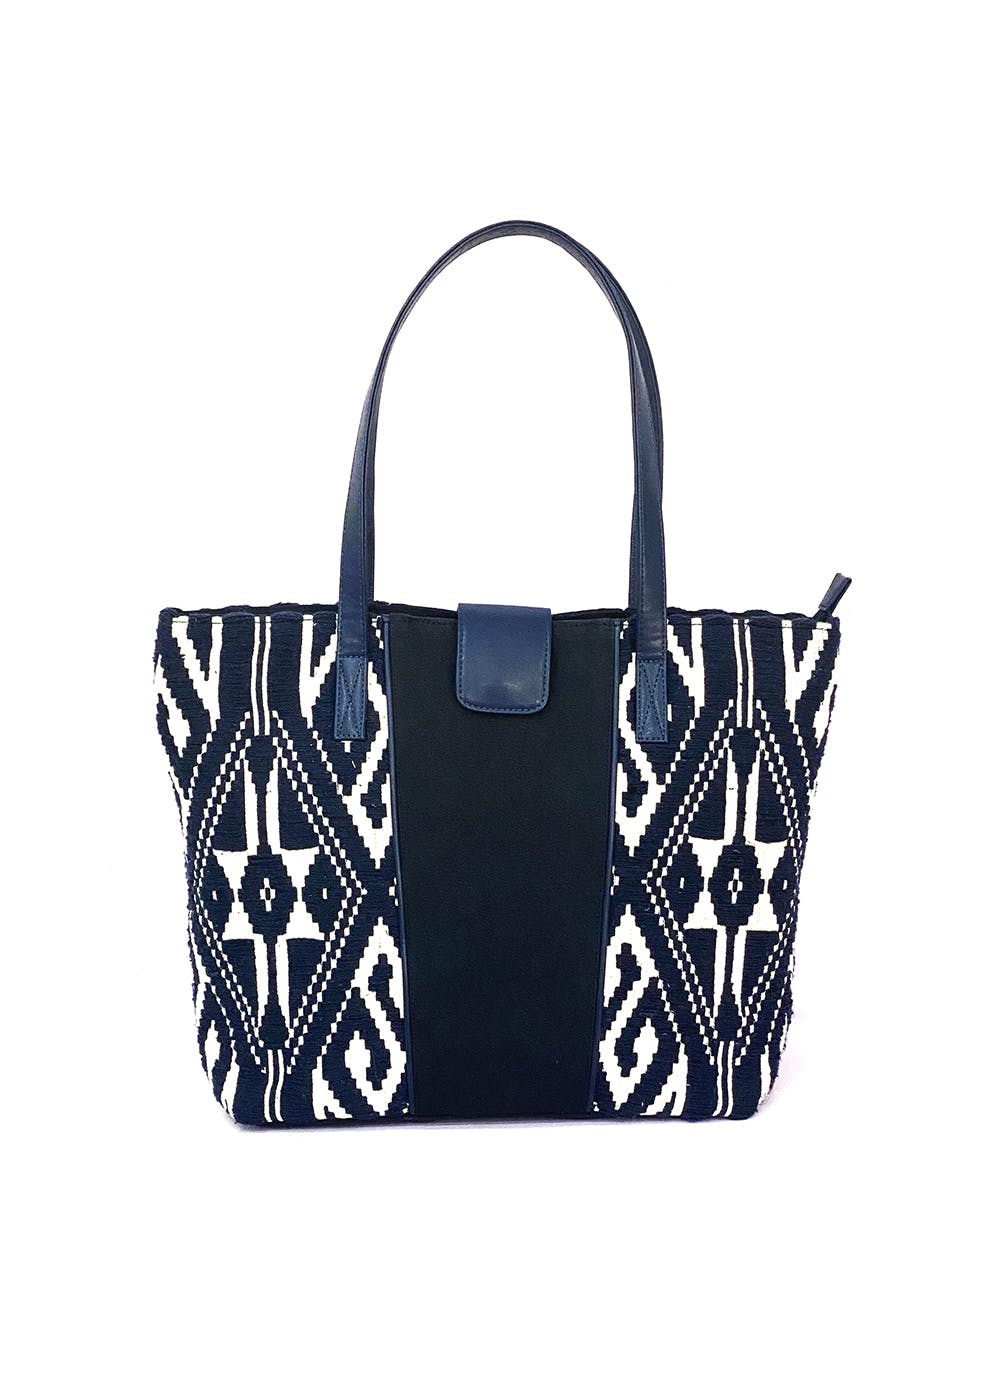 Get Navy Blue Jacquard & Canvas Handbag at ₹ 1299 | LBB Shop